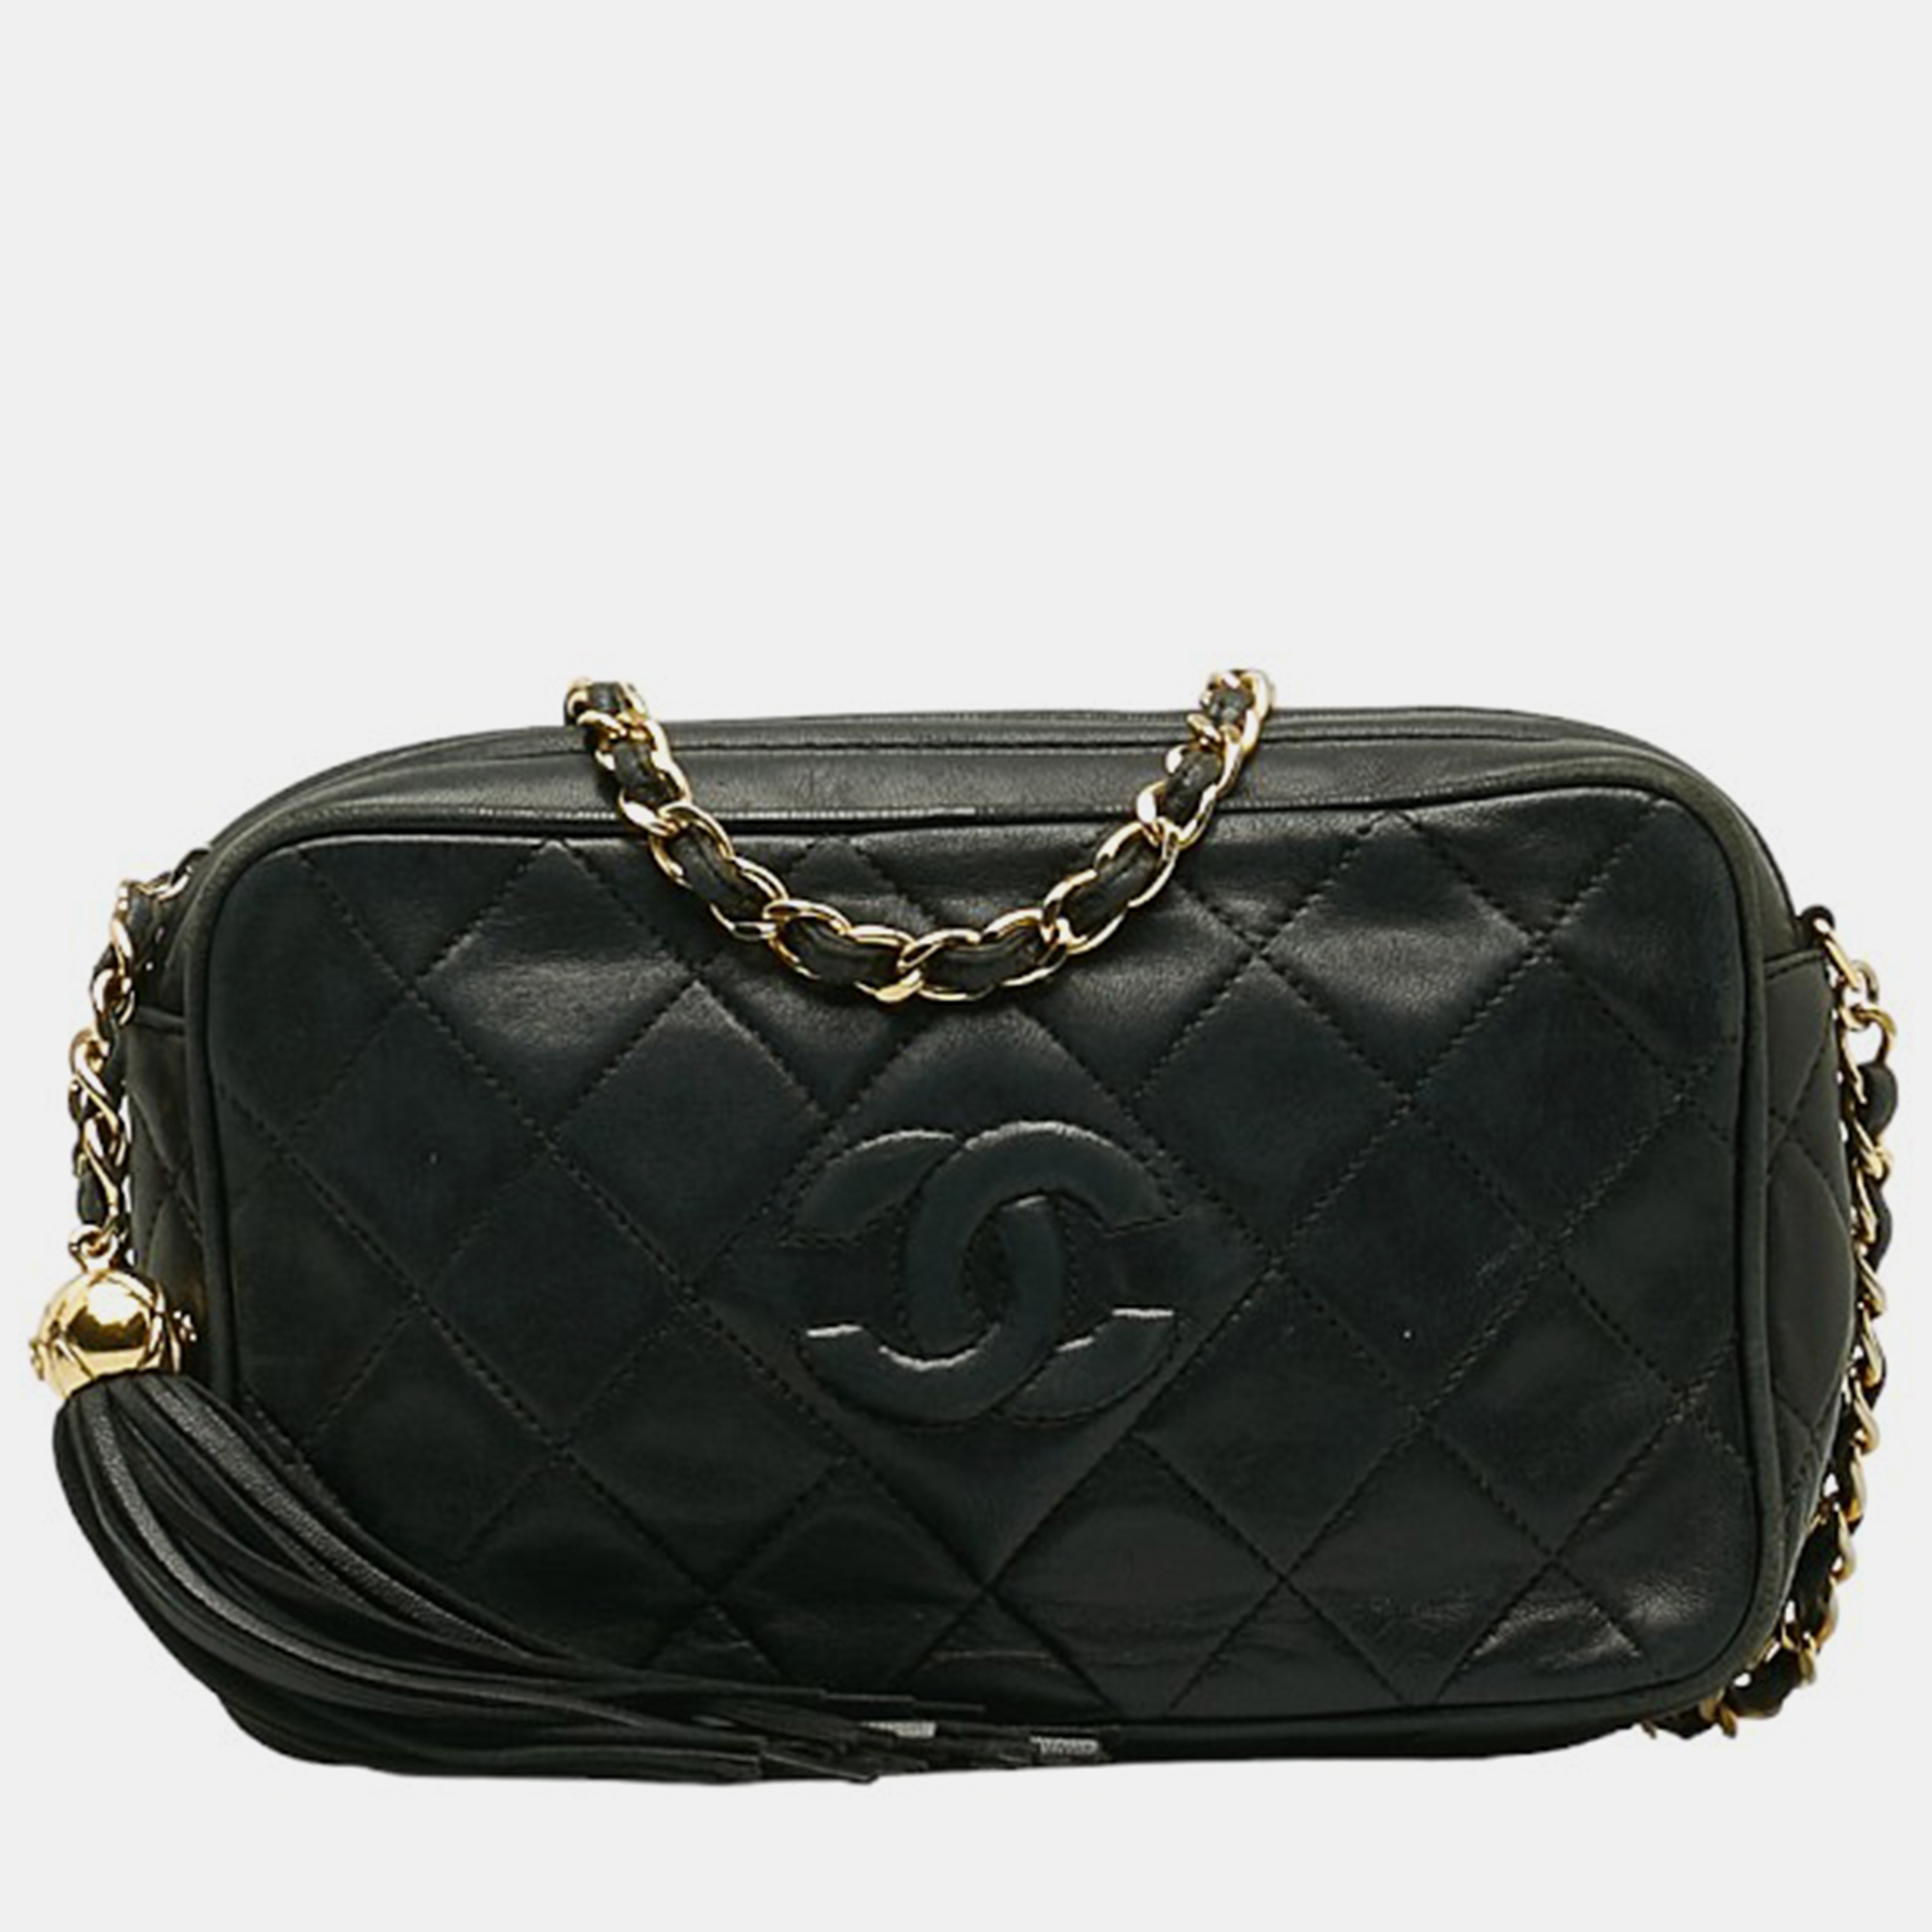 Chanel black leather cc camera bag